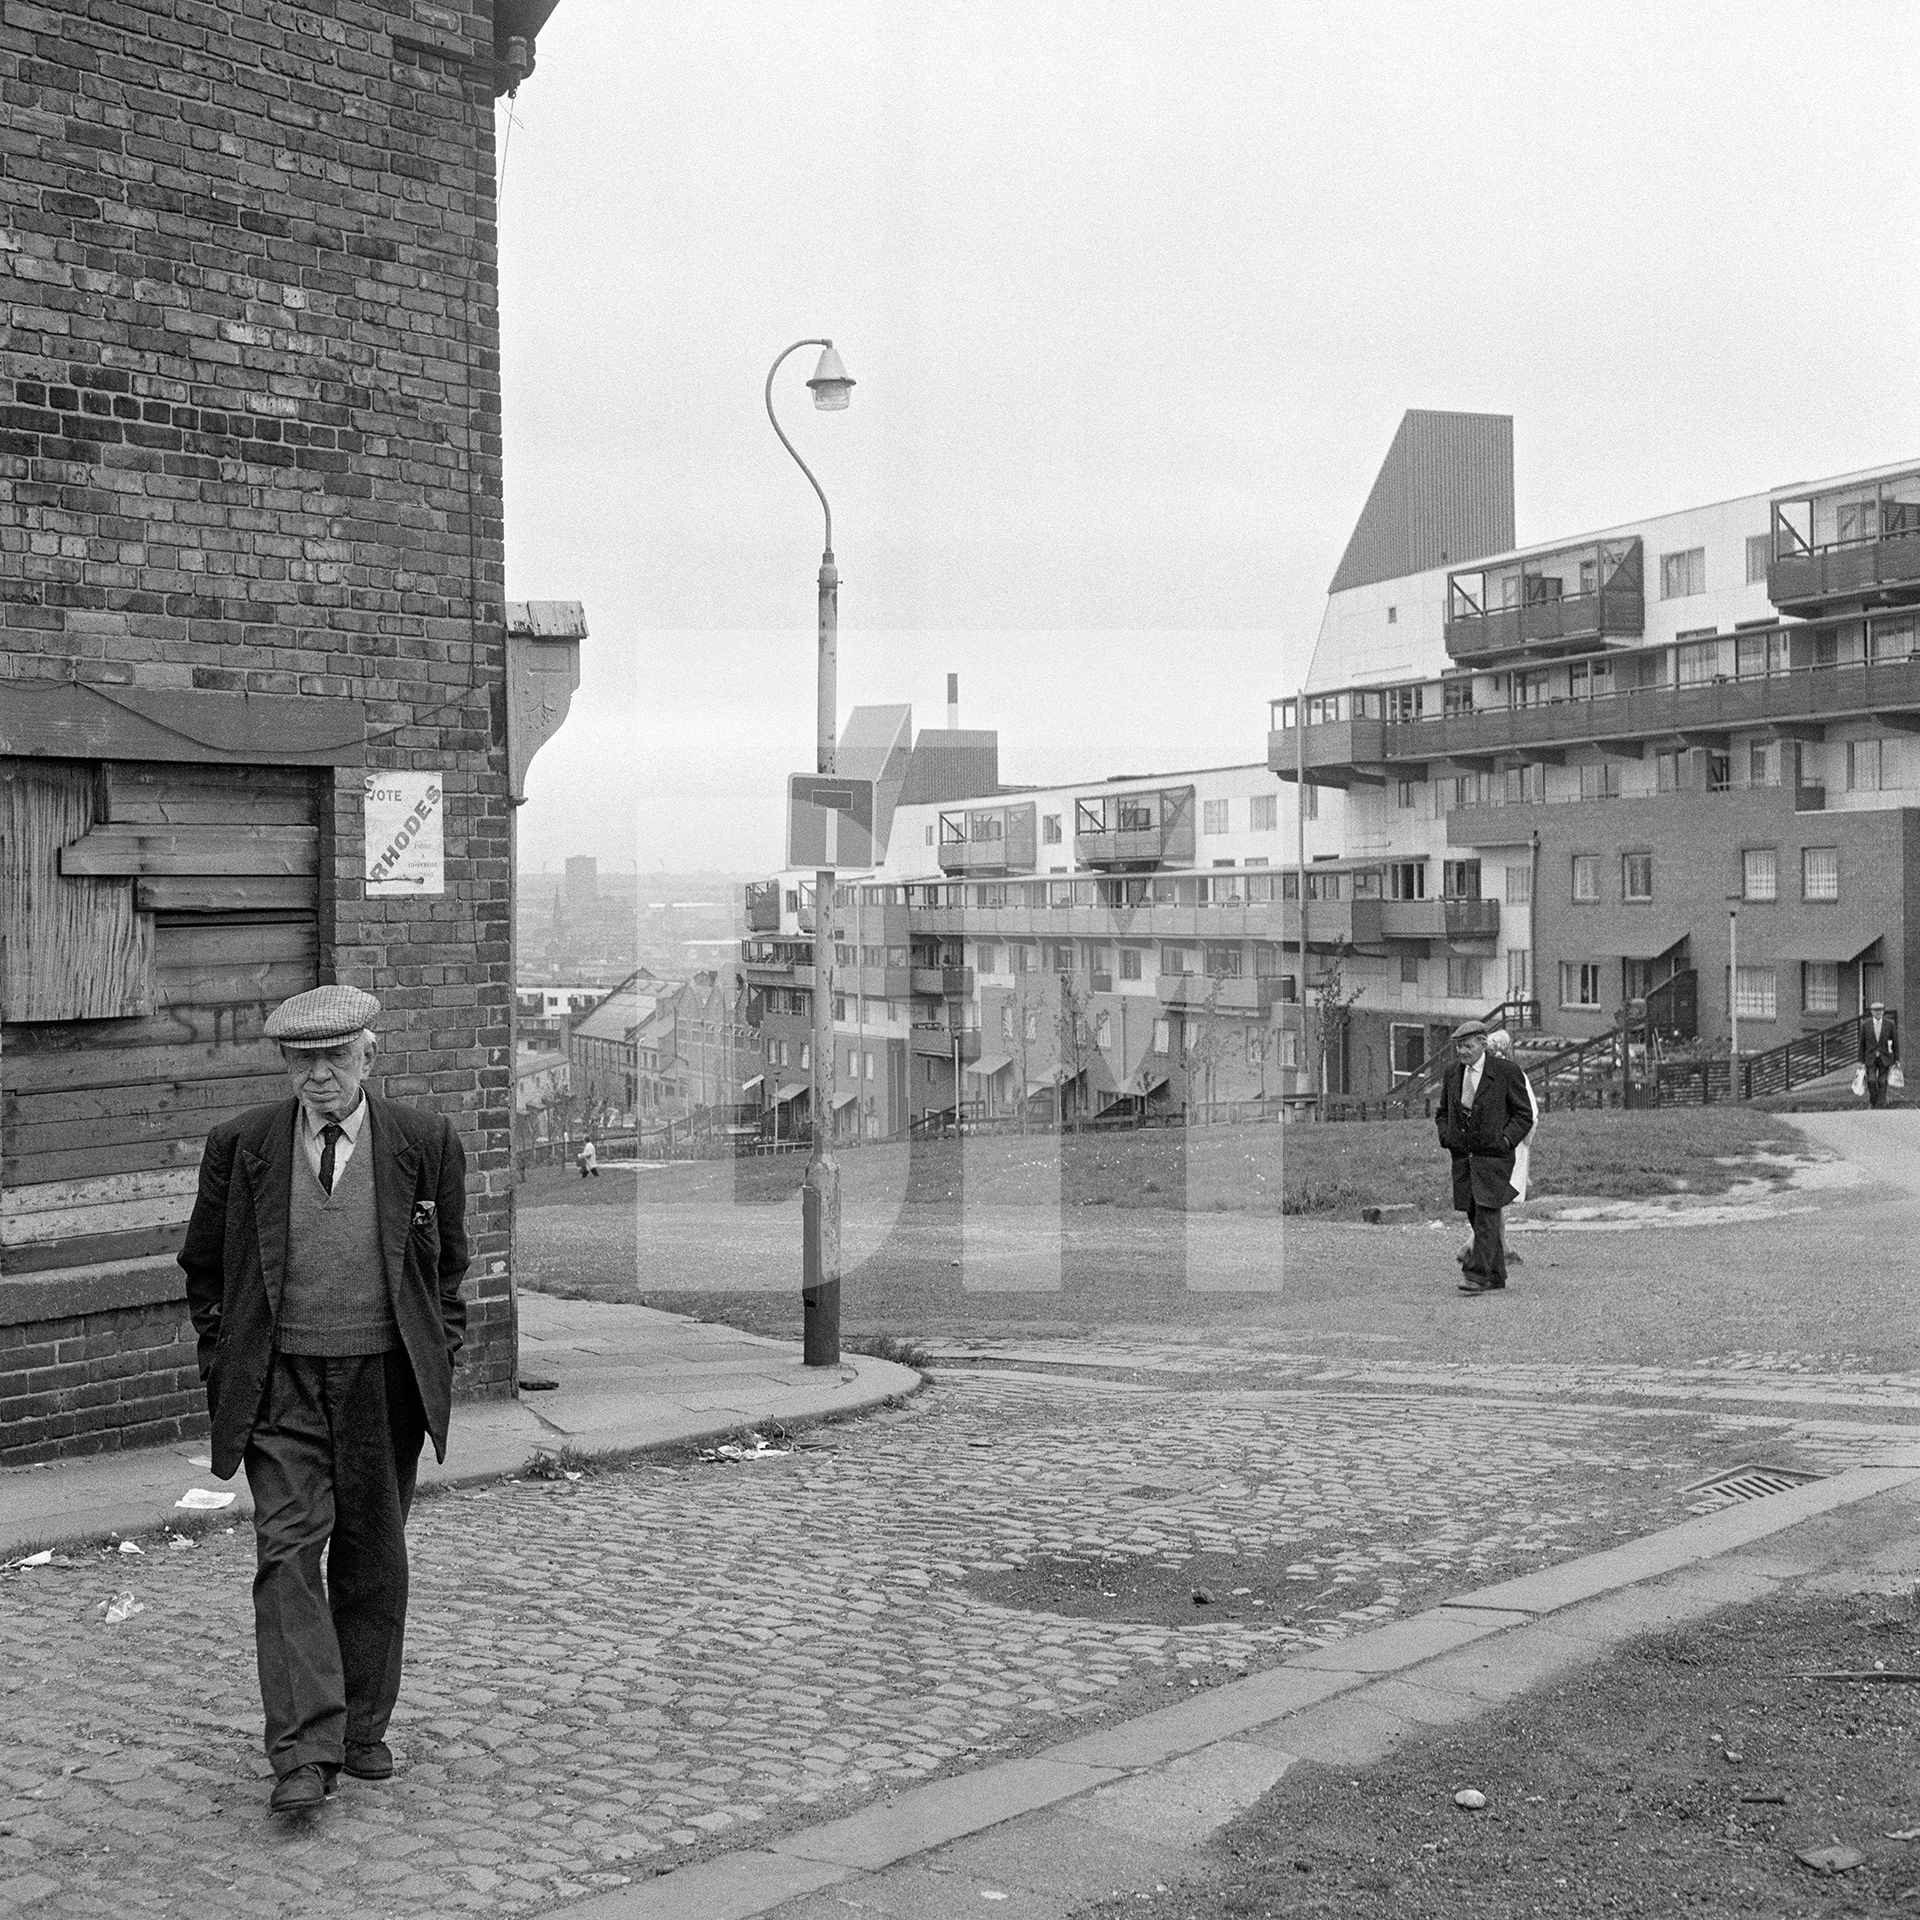 Byker Wall, Newcastle upon Tyne. September 1974 by Daniel Meadows